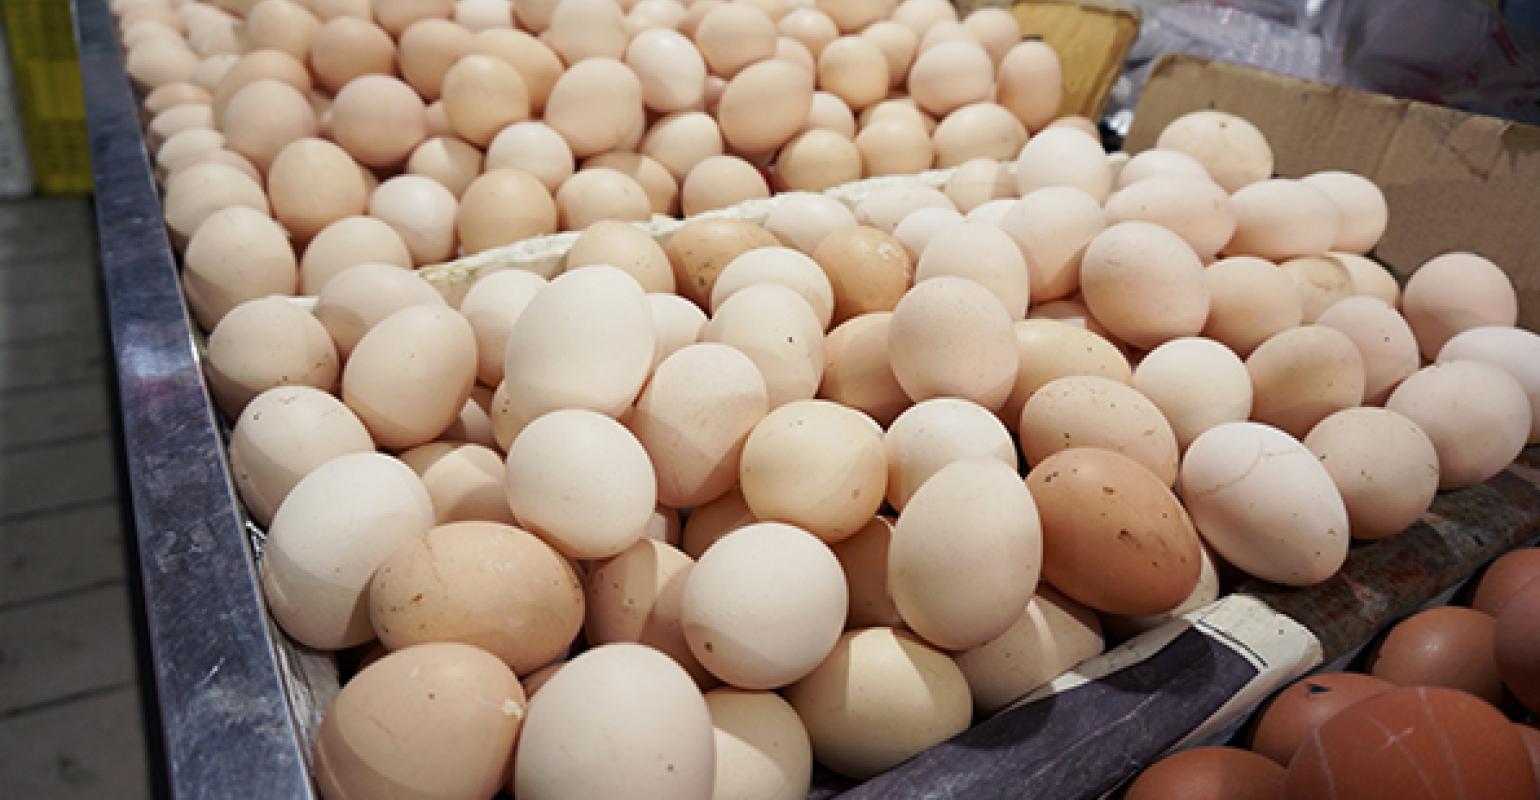 Avian flu limits egg supply, challenging restaurants Nation's